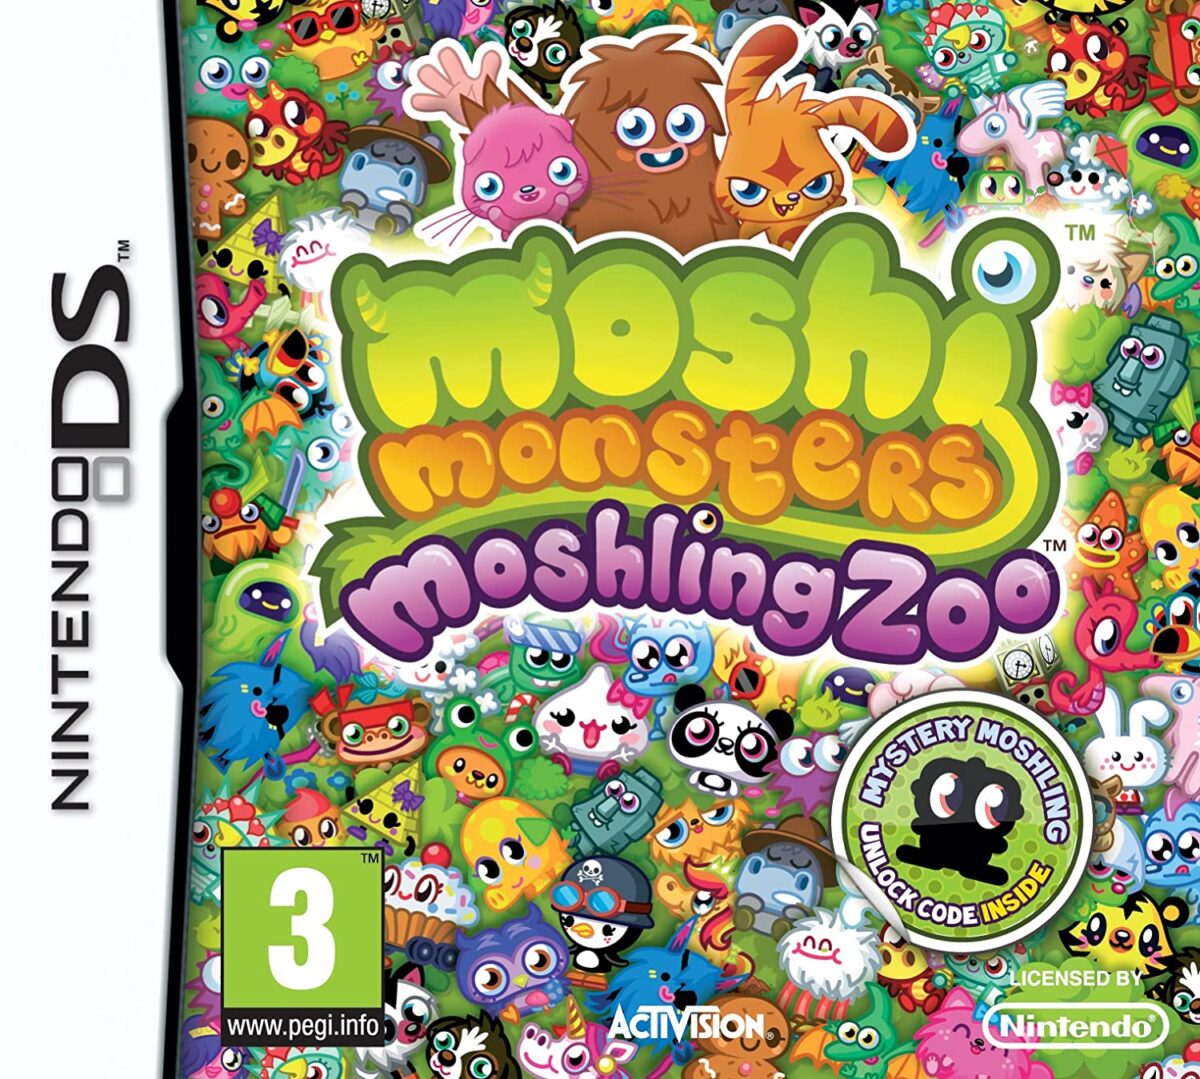 Moshi Monsters Moshling Zoo (DS) (No manual)